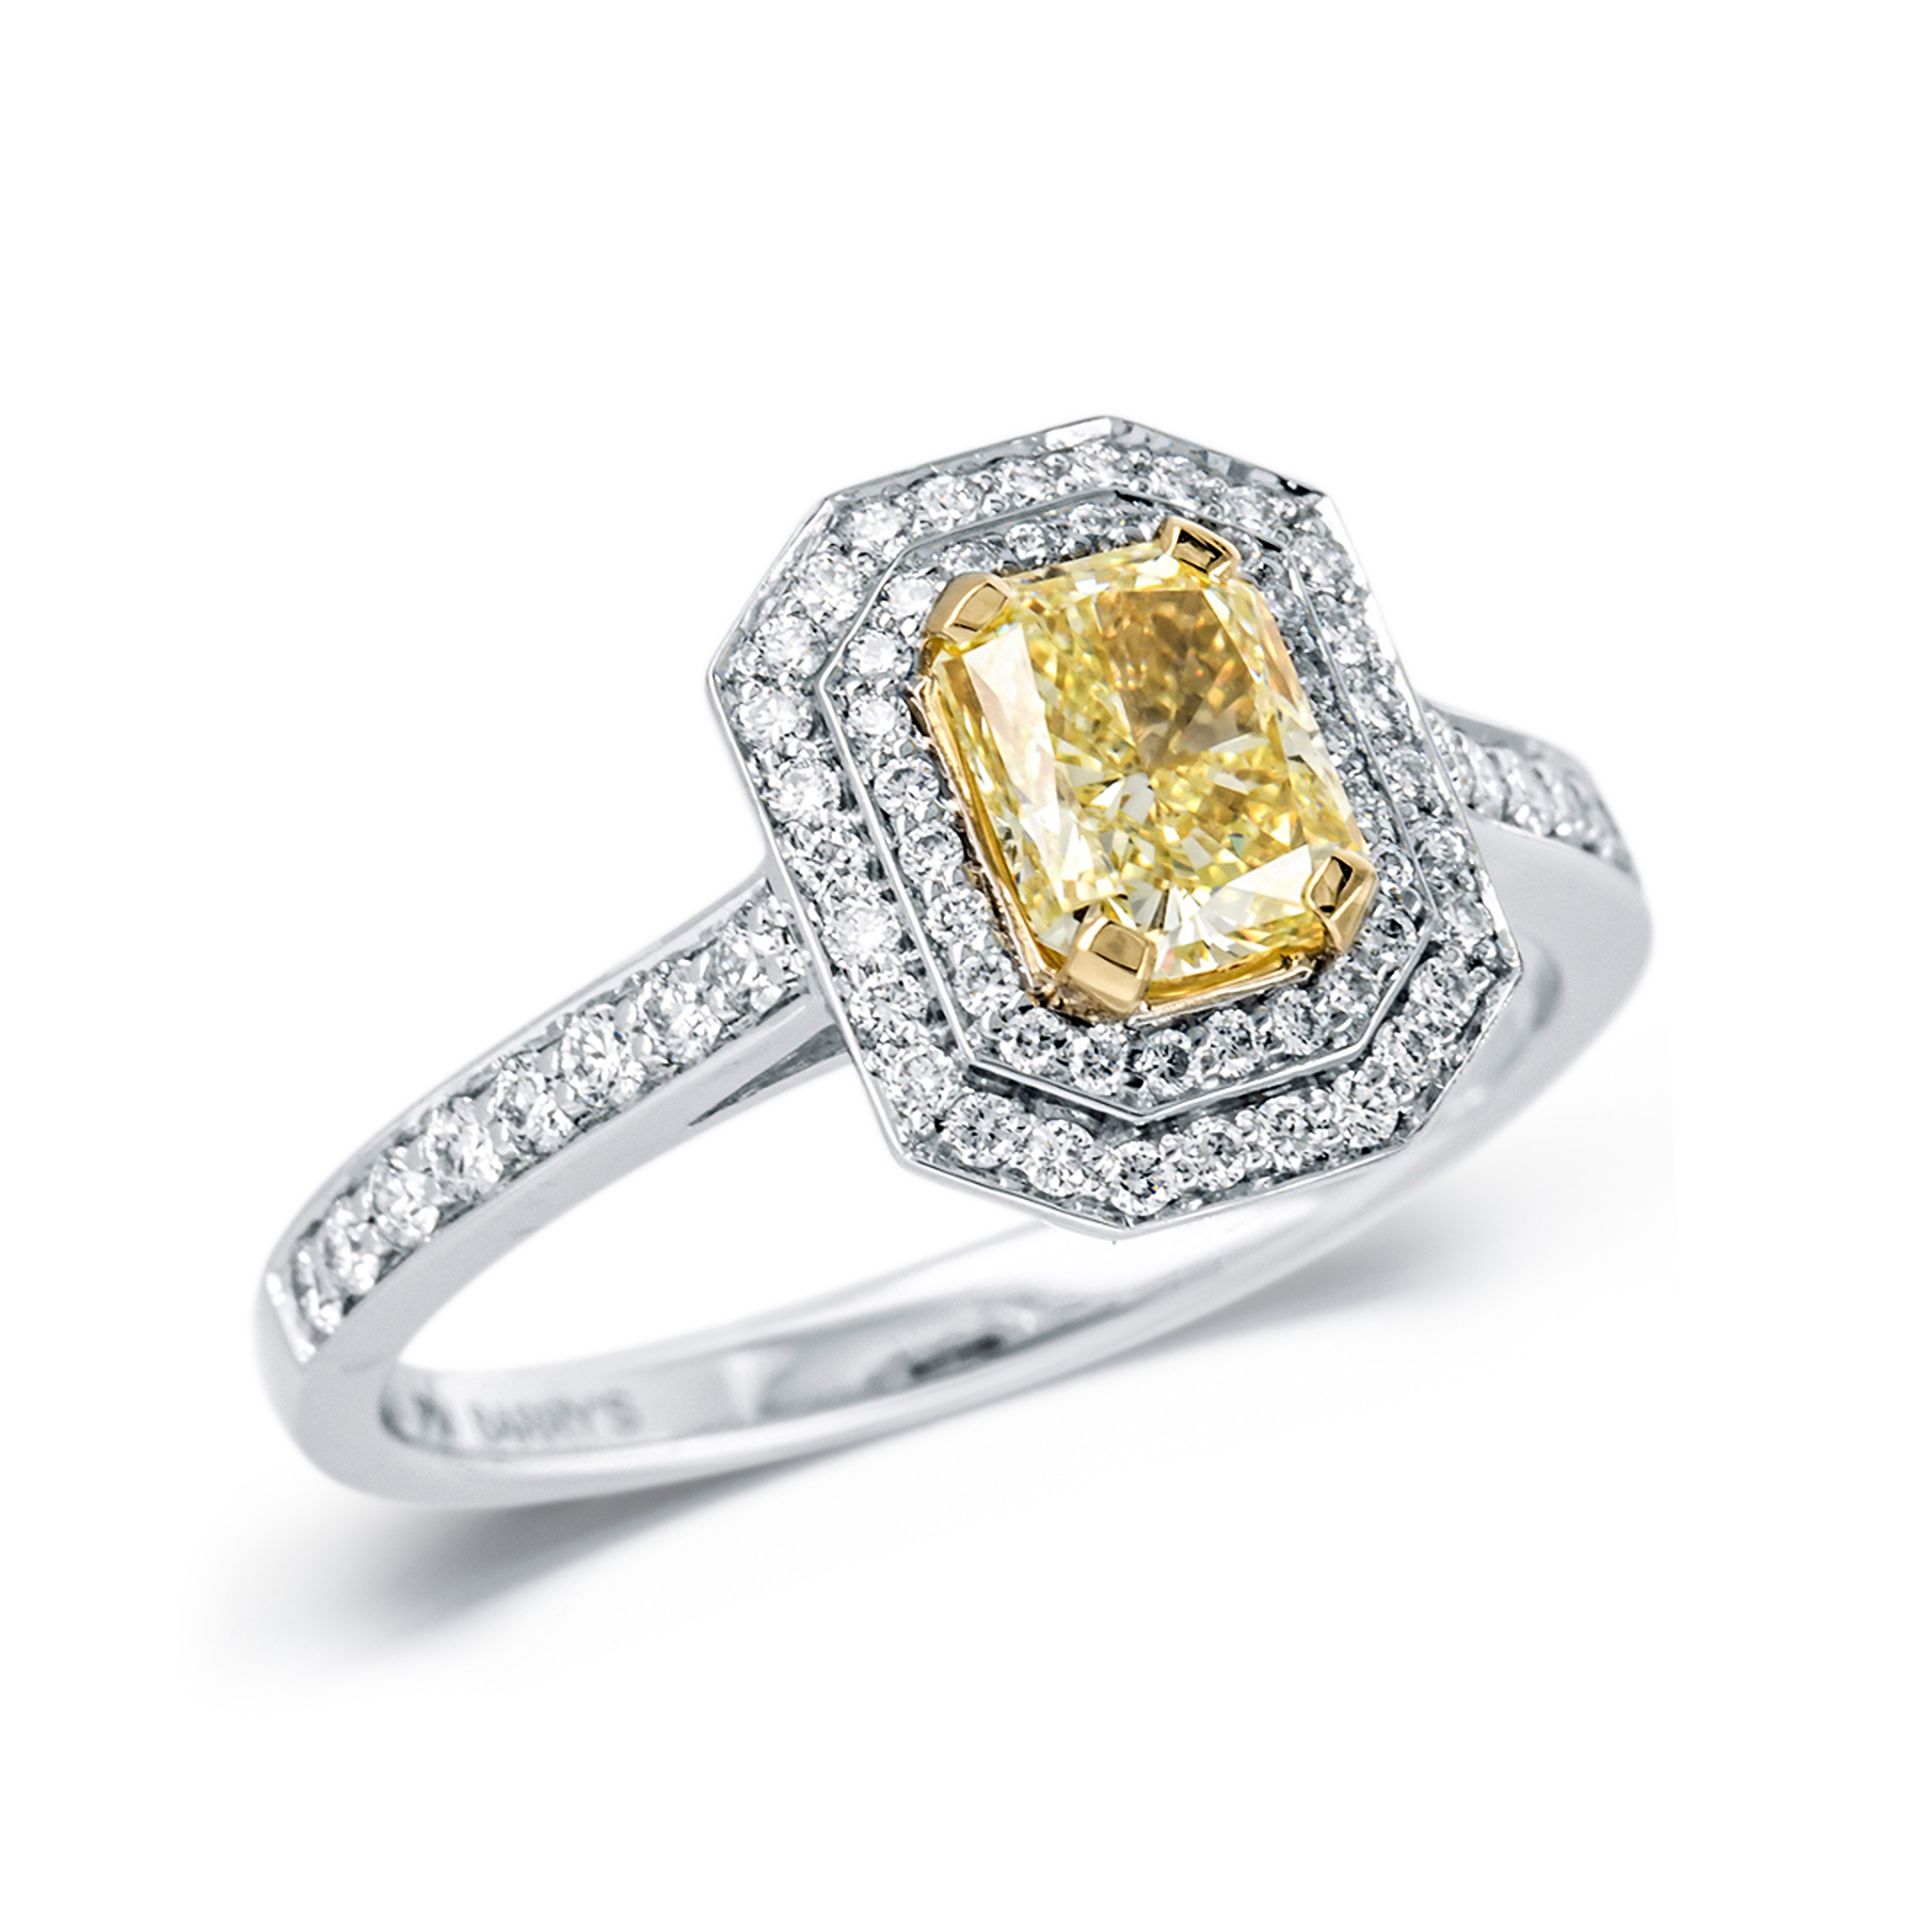 Verlobungsring Platin und 18 Karat Gelbgold | Engagement Ring Platinum and 18 Karat Yellow Gold